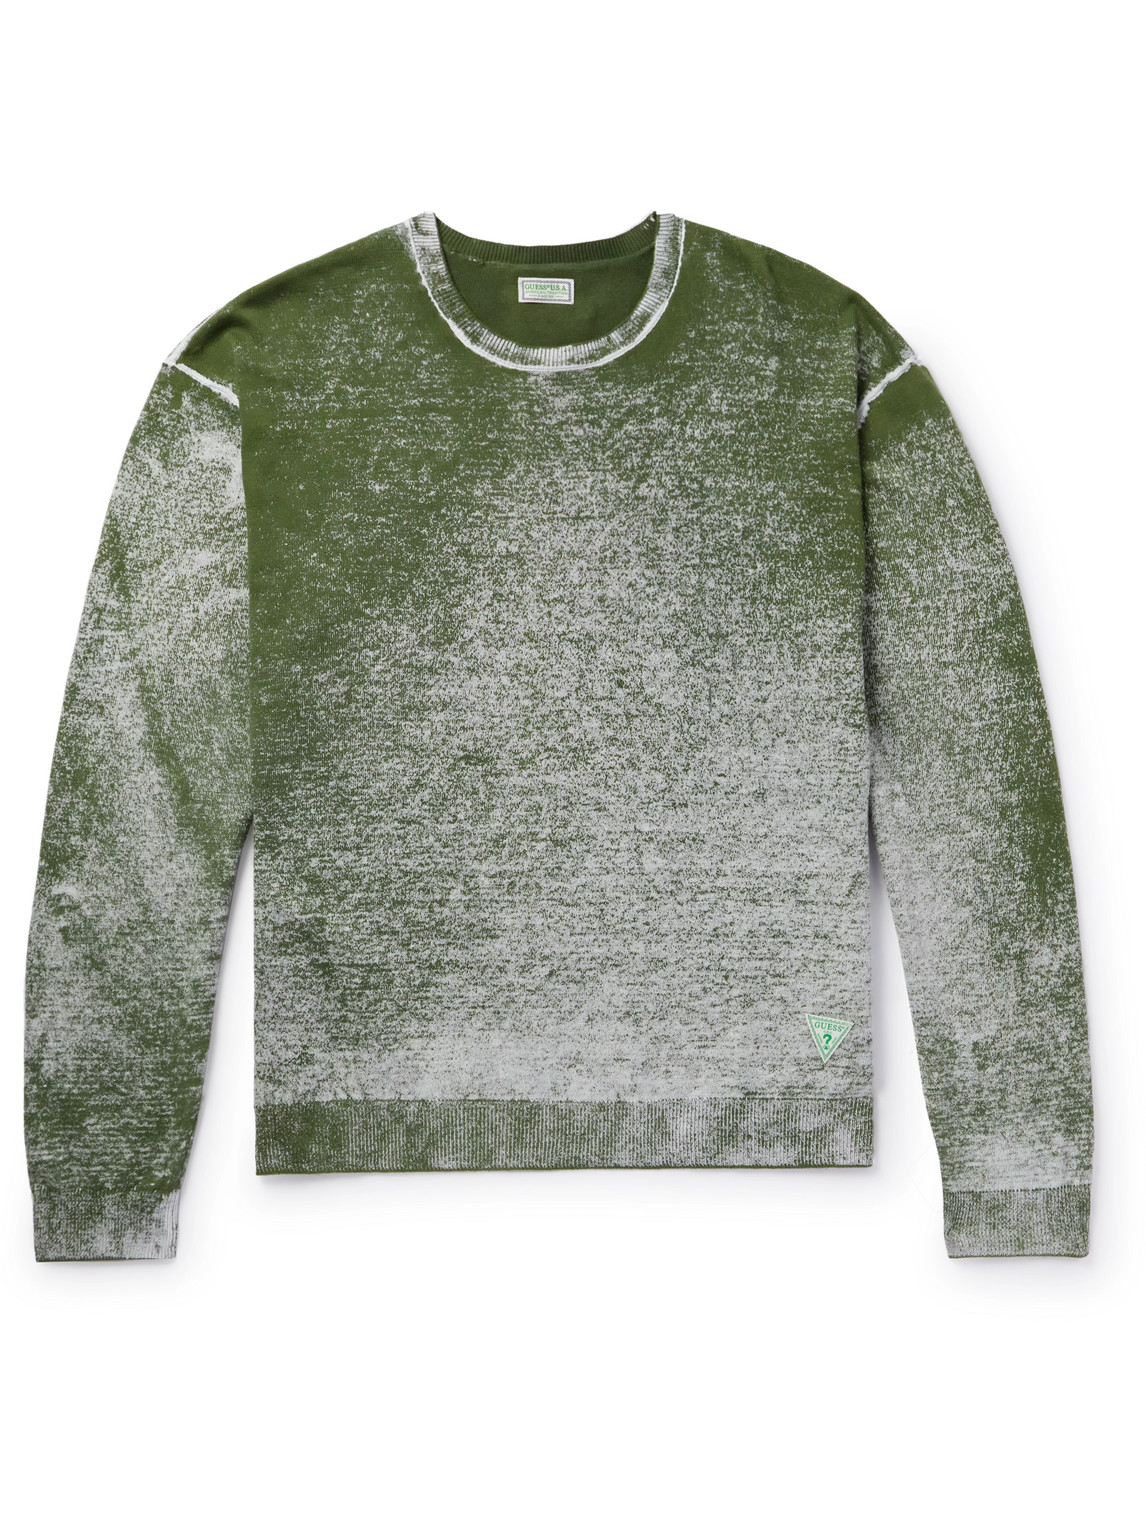 Guess USA Dégradé Cotton-Jersey Sweatshirt